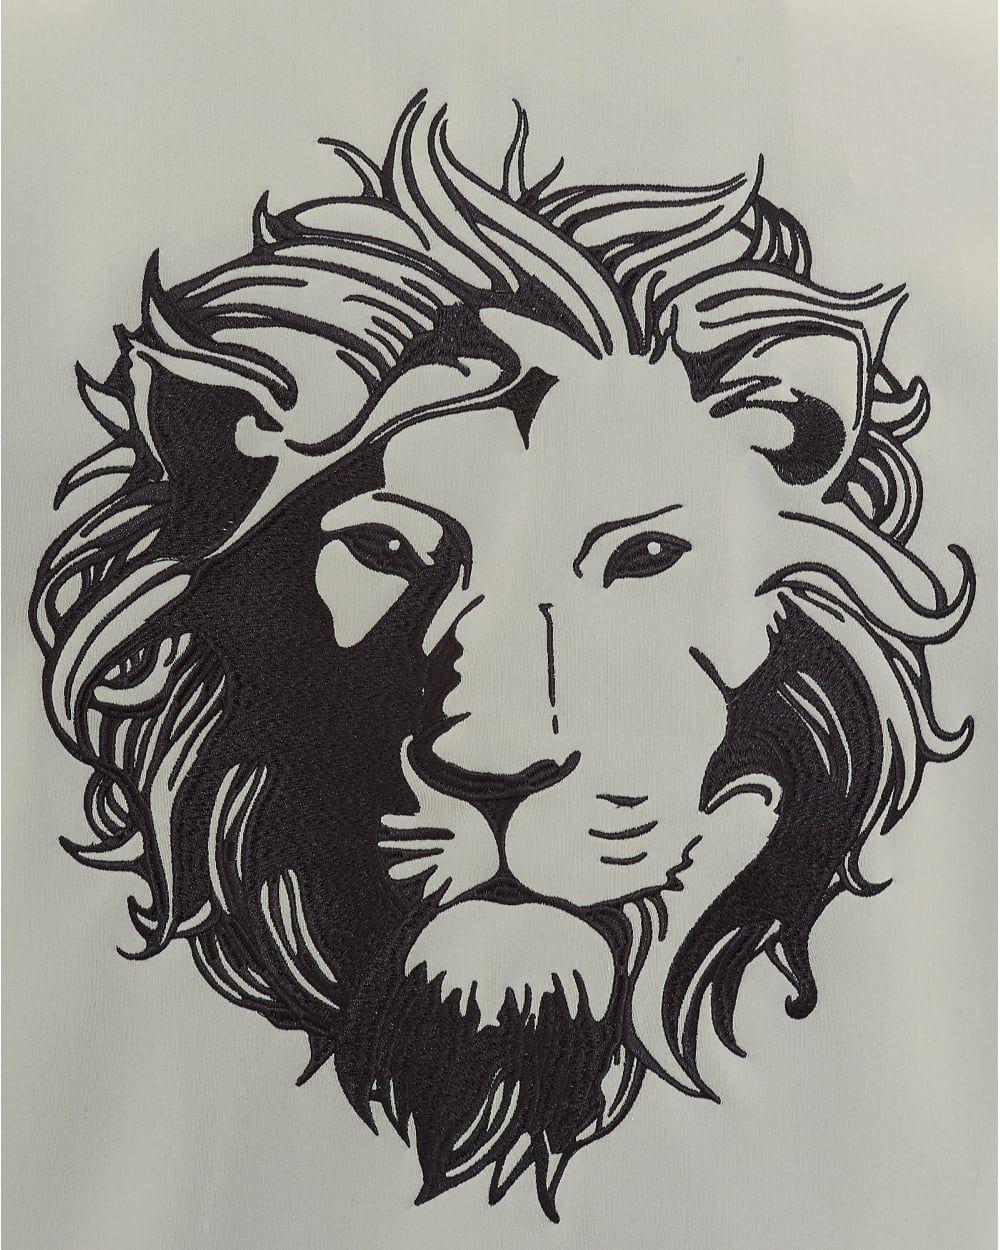 Versace Lion Logo - Versus Versace Mens Jacket, Lion Logo Black and Grey Baseball Jacket